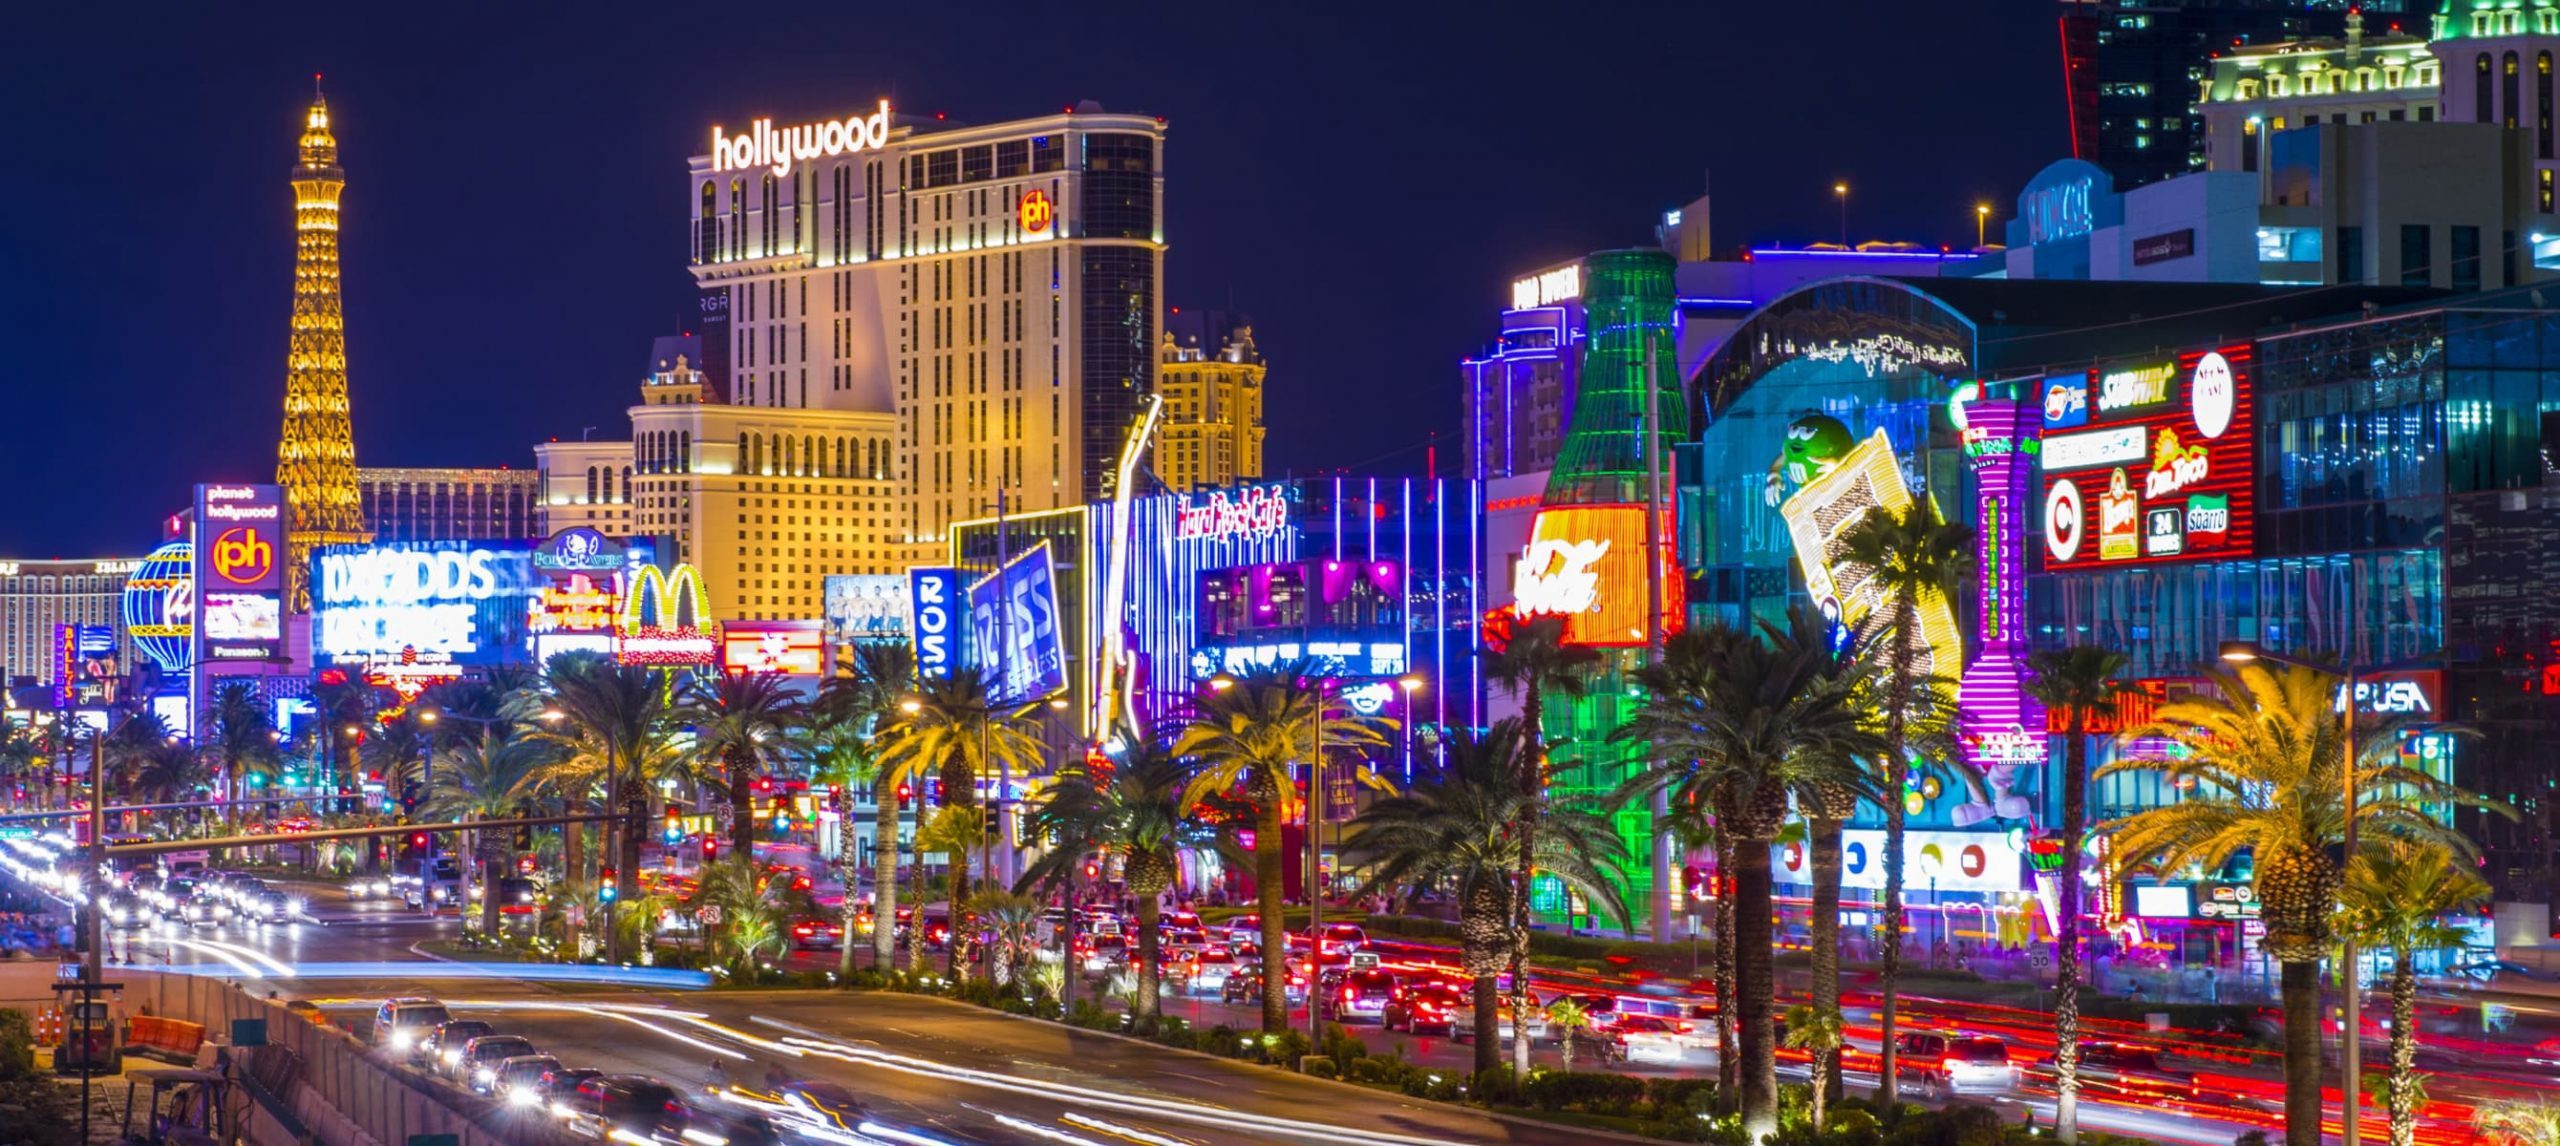 Las Vegas Strip Tour: The Top 9 Attractions To Visit